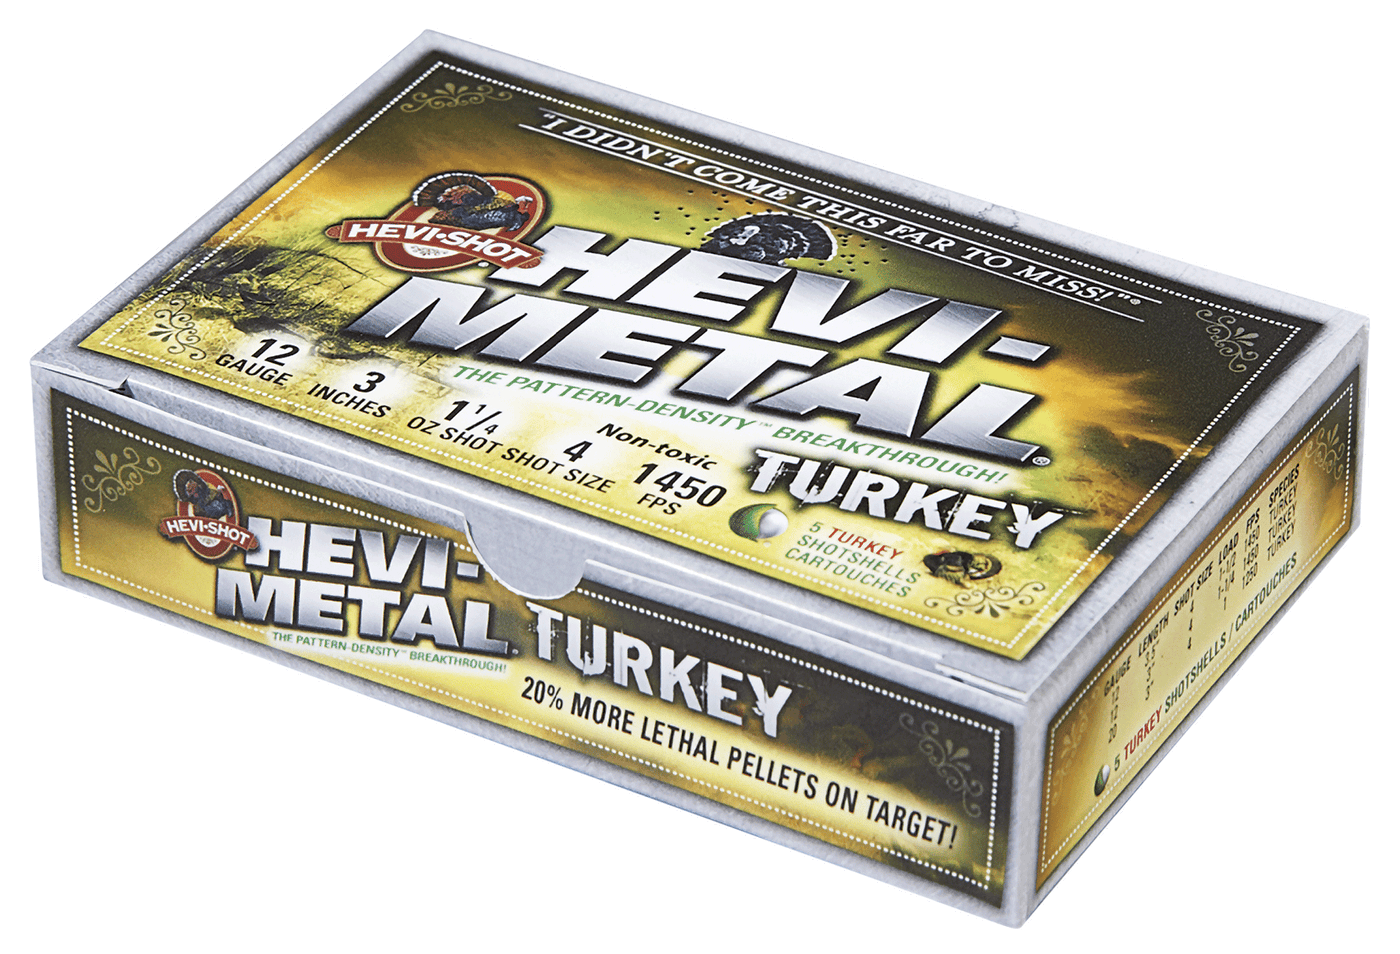 Hevishot Hevi Shot Hevi Metal Turkey Loads 12 Ga. 3 In. 1 1/4 Oz. 4 Shot 5 Rd. Ammo